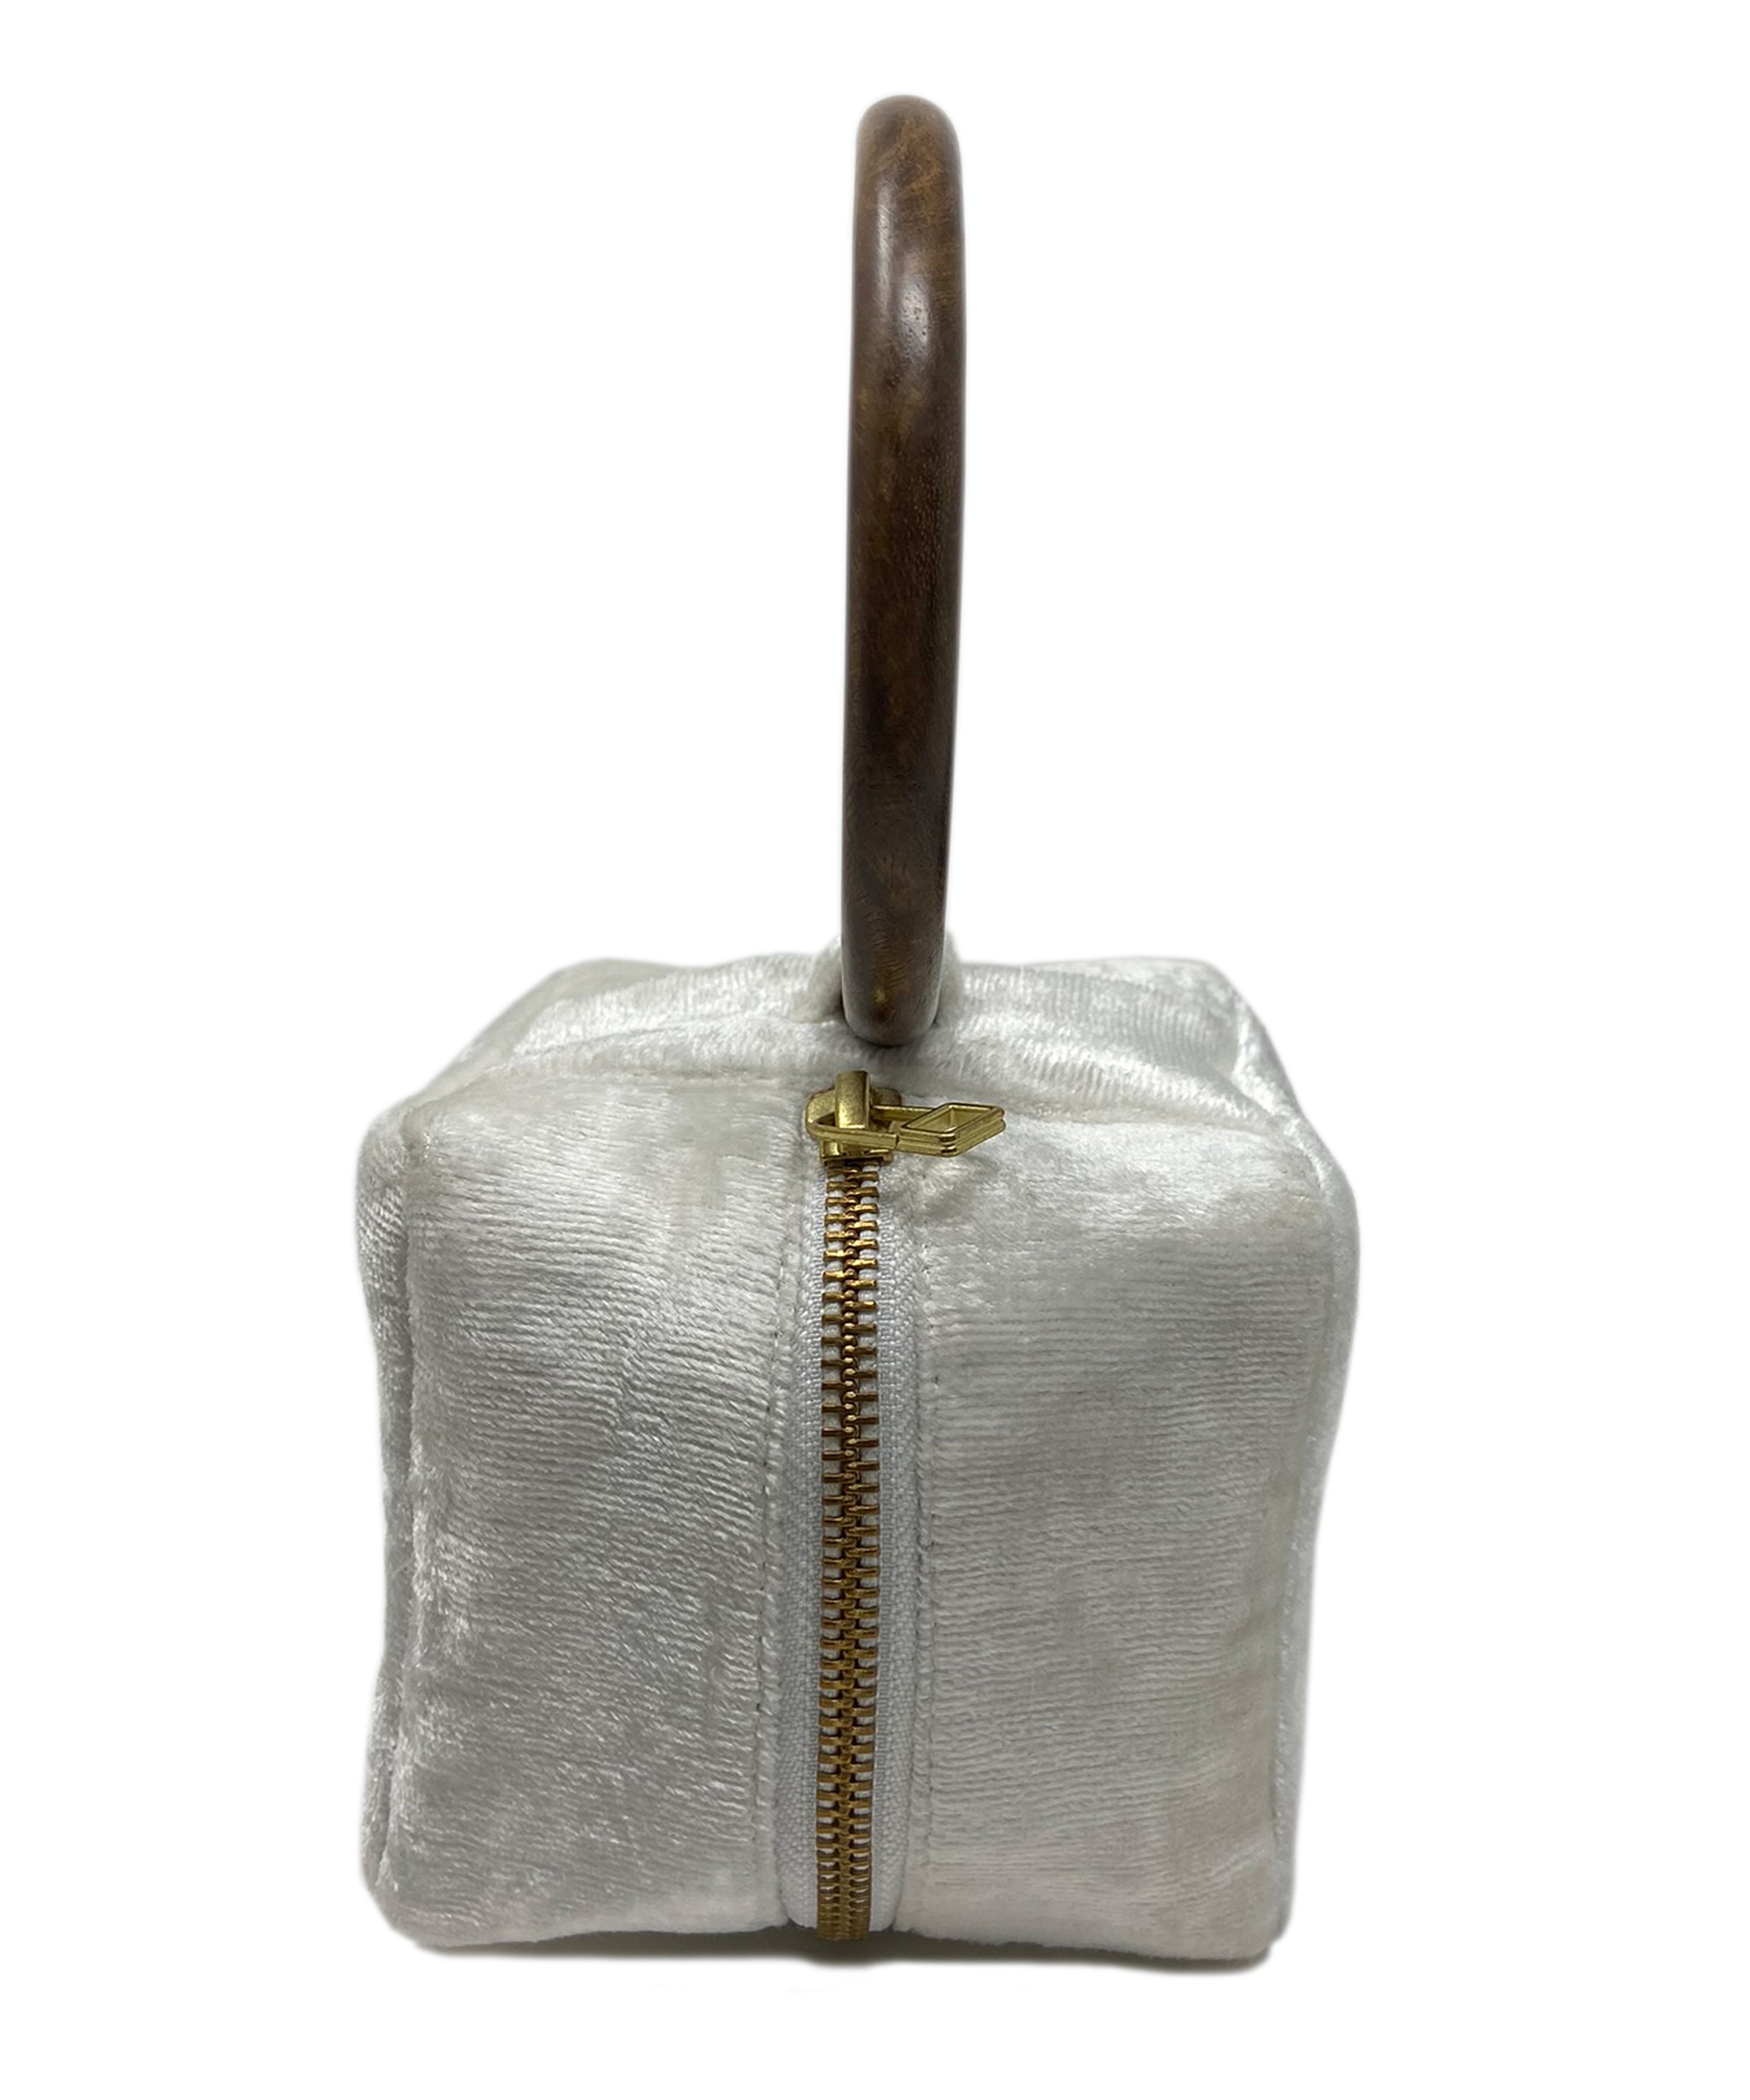 Loghot 4Pcs D Shape Wooden Handles Replacement for Handmade Purse Beach Bag  Handbags Straw Bag Handles (Dark Brown) : Amazon.in: Home & Kitchen